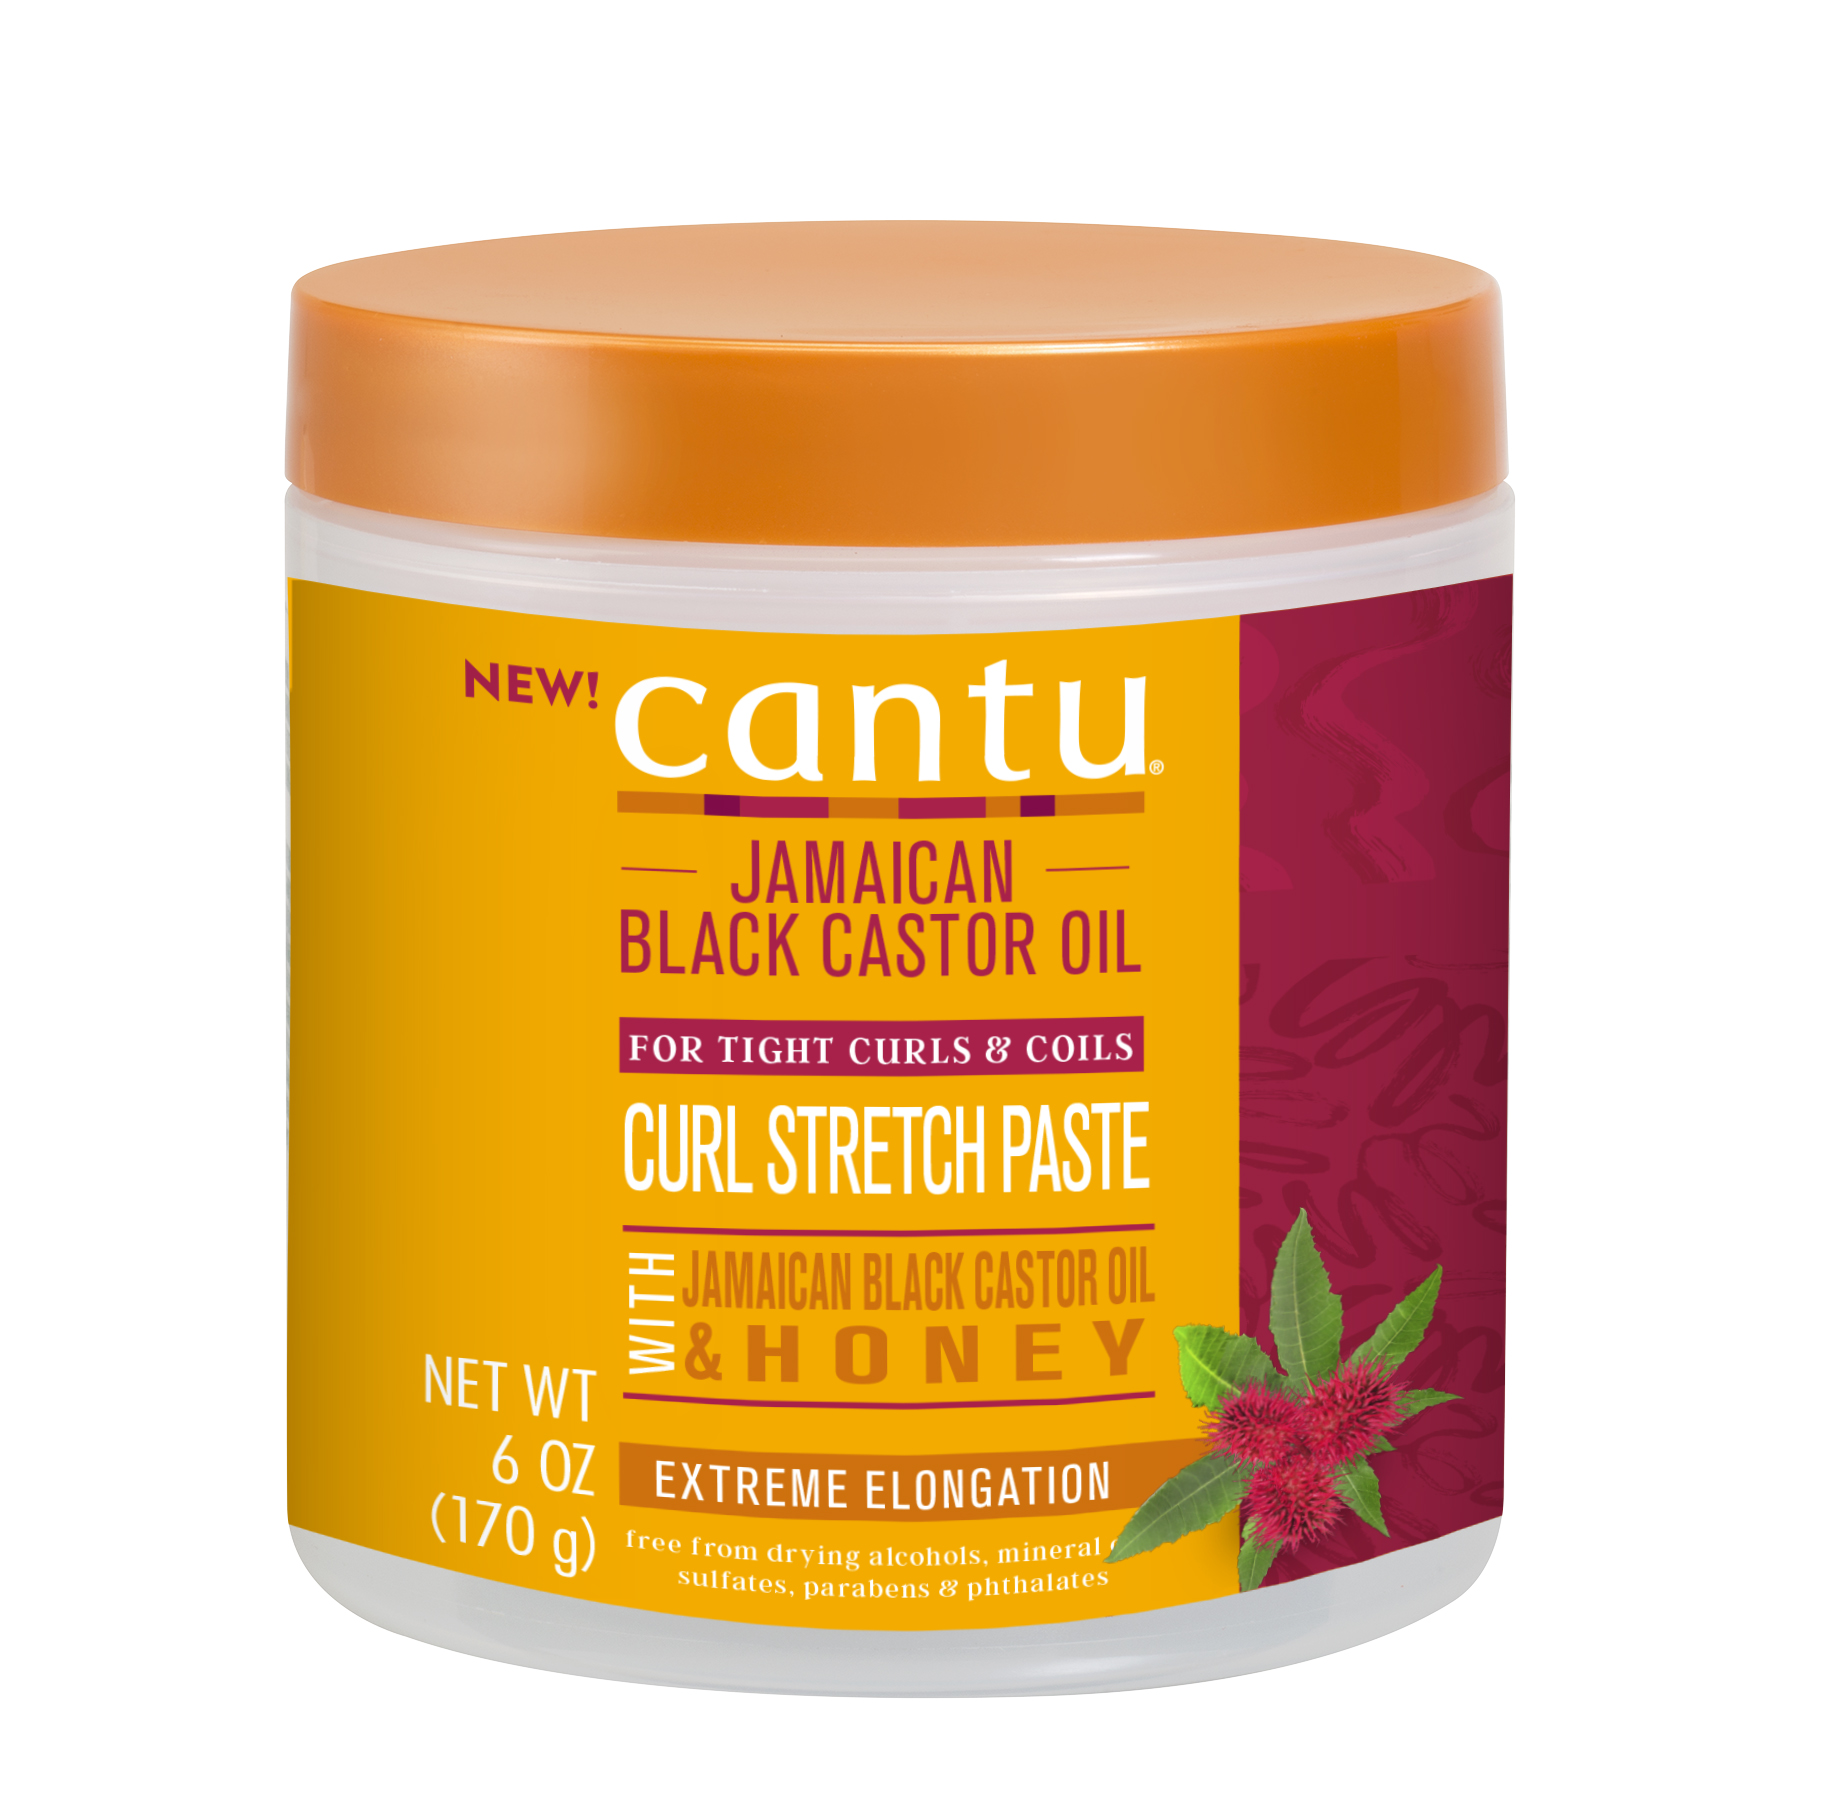 Cantu Jamaican Black Castor Oil Curl Stretch Paste, 6 oz. - image 1 of 7